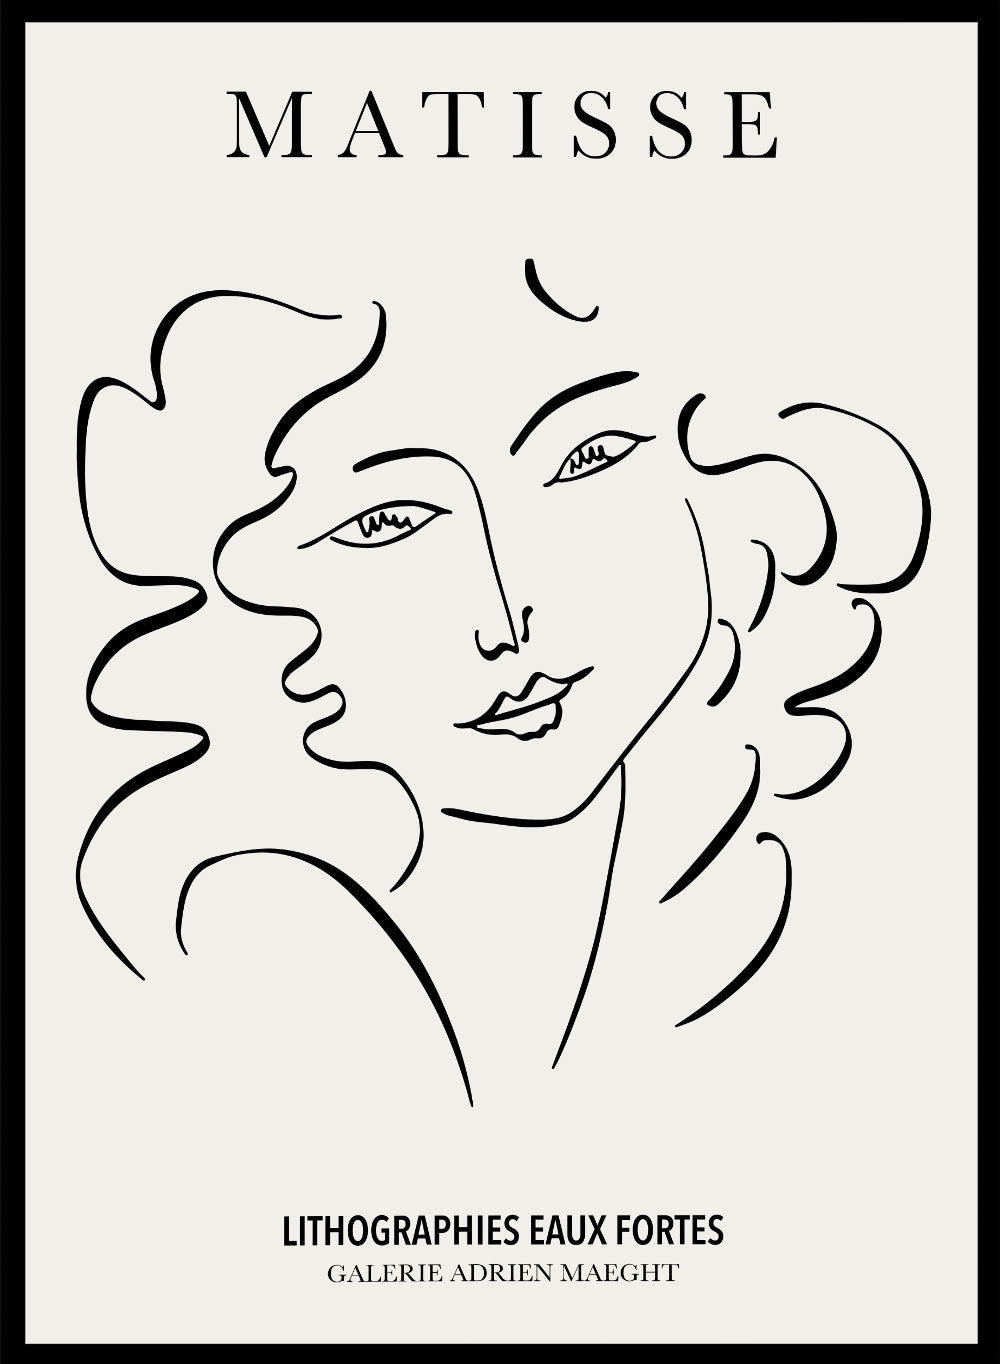 Sketch of Woman by Henri Matisse Print